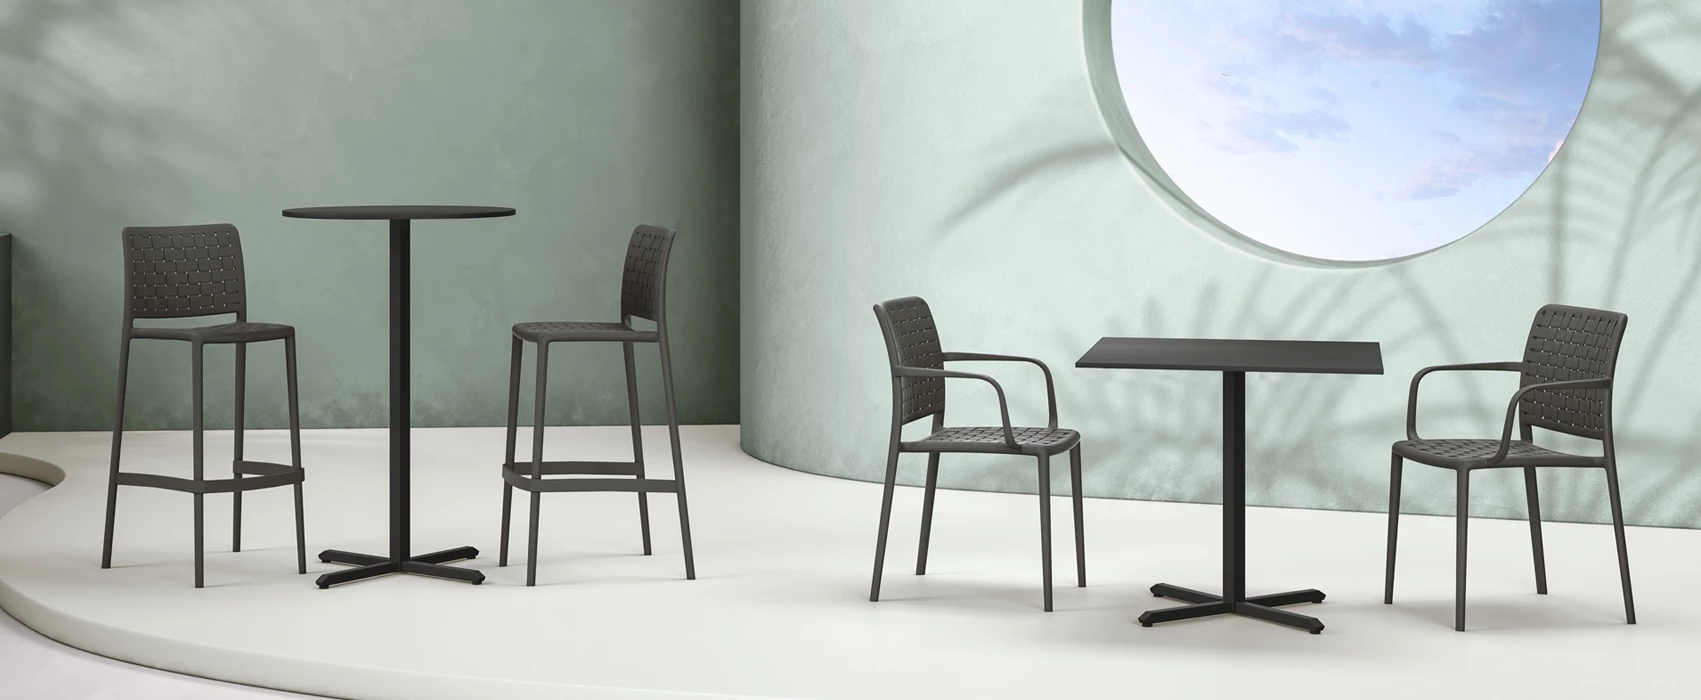 Polypropylene Chair Grey Metal Table